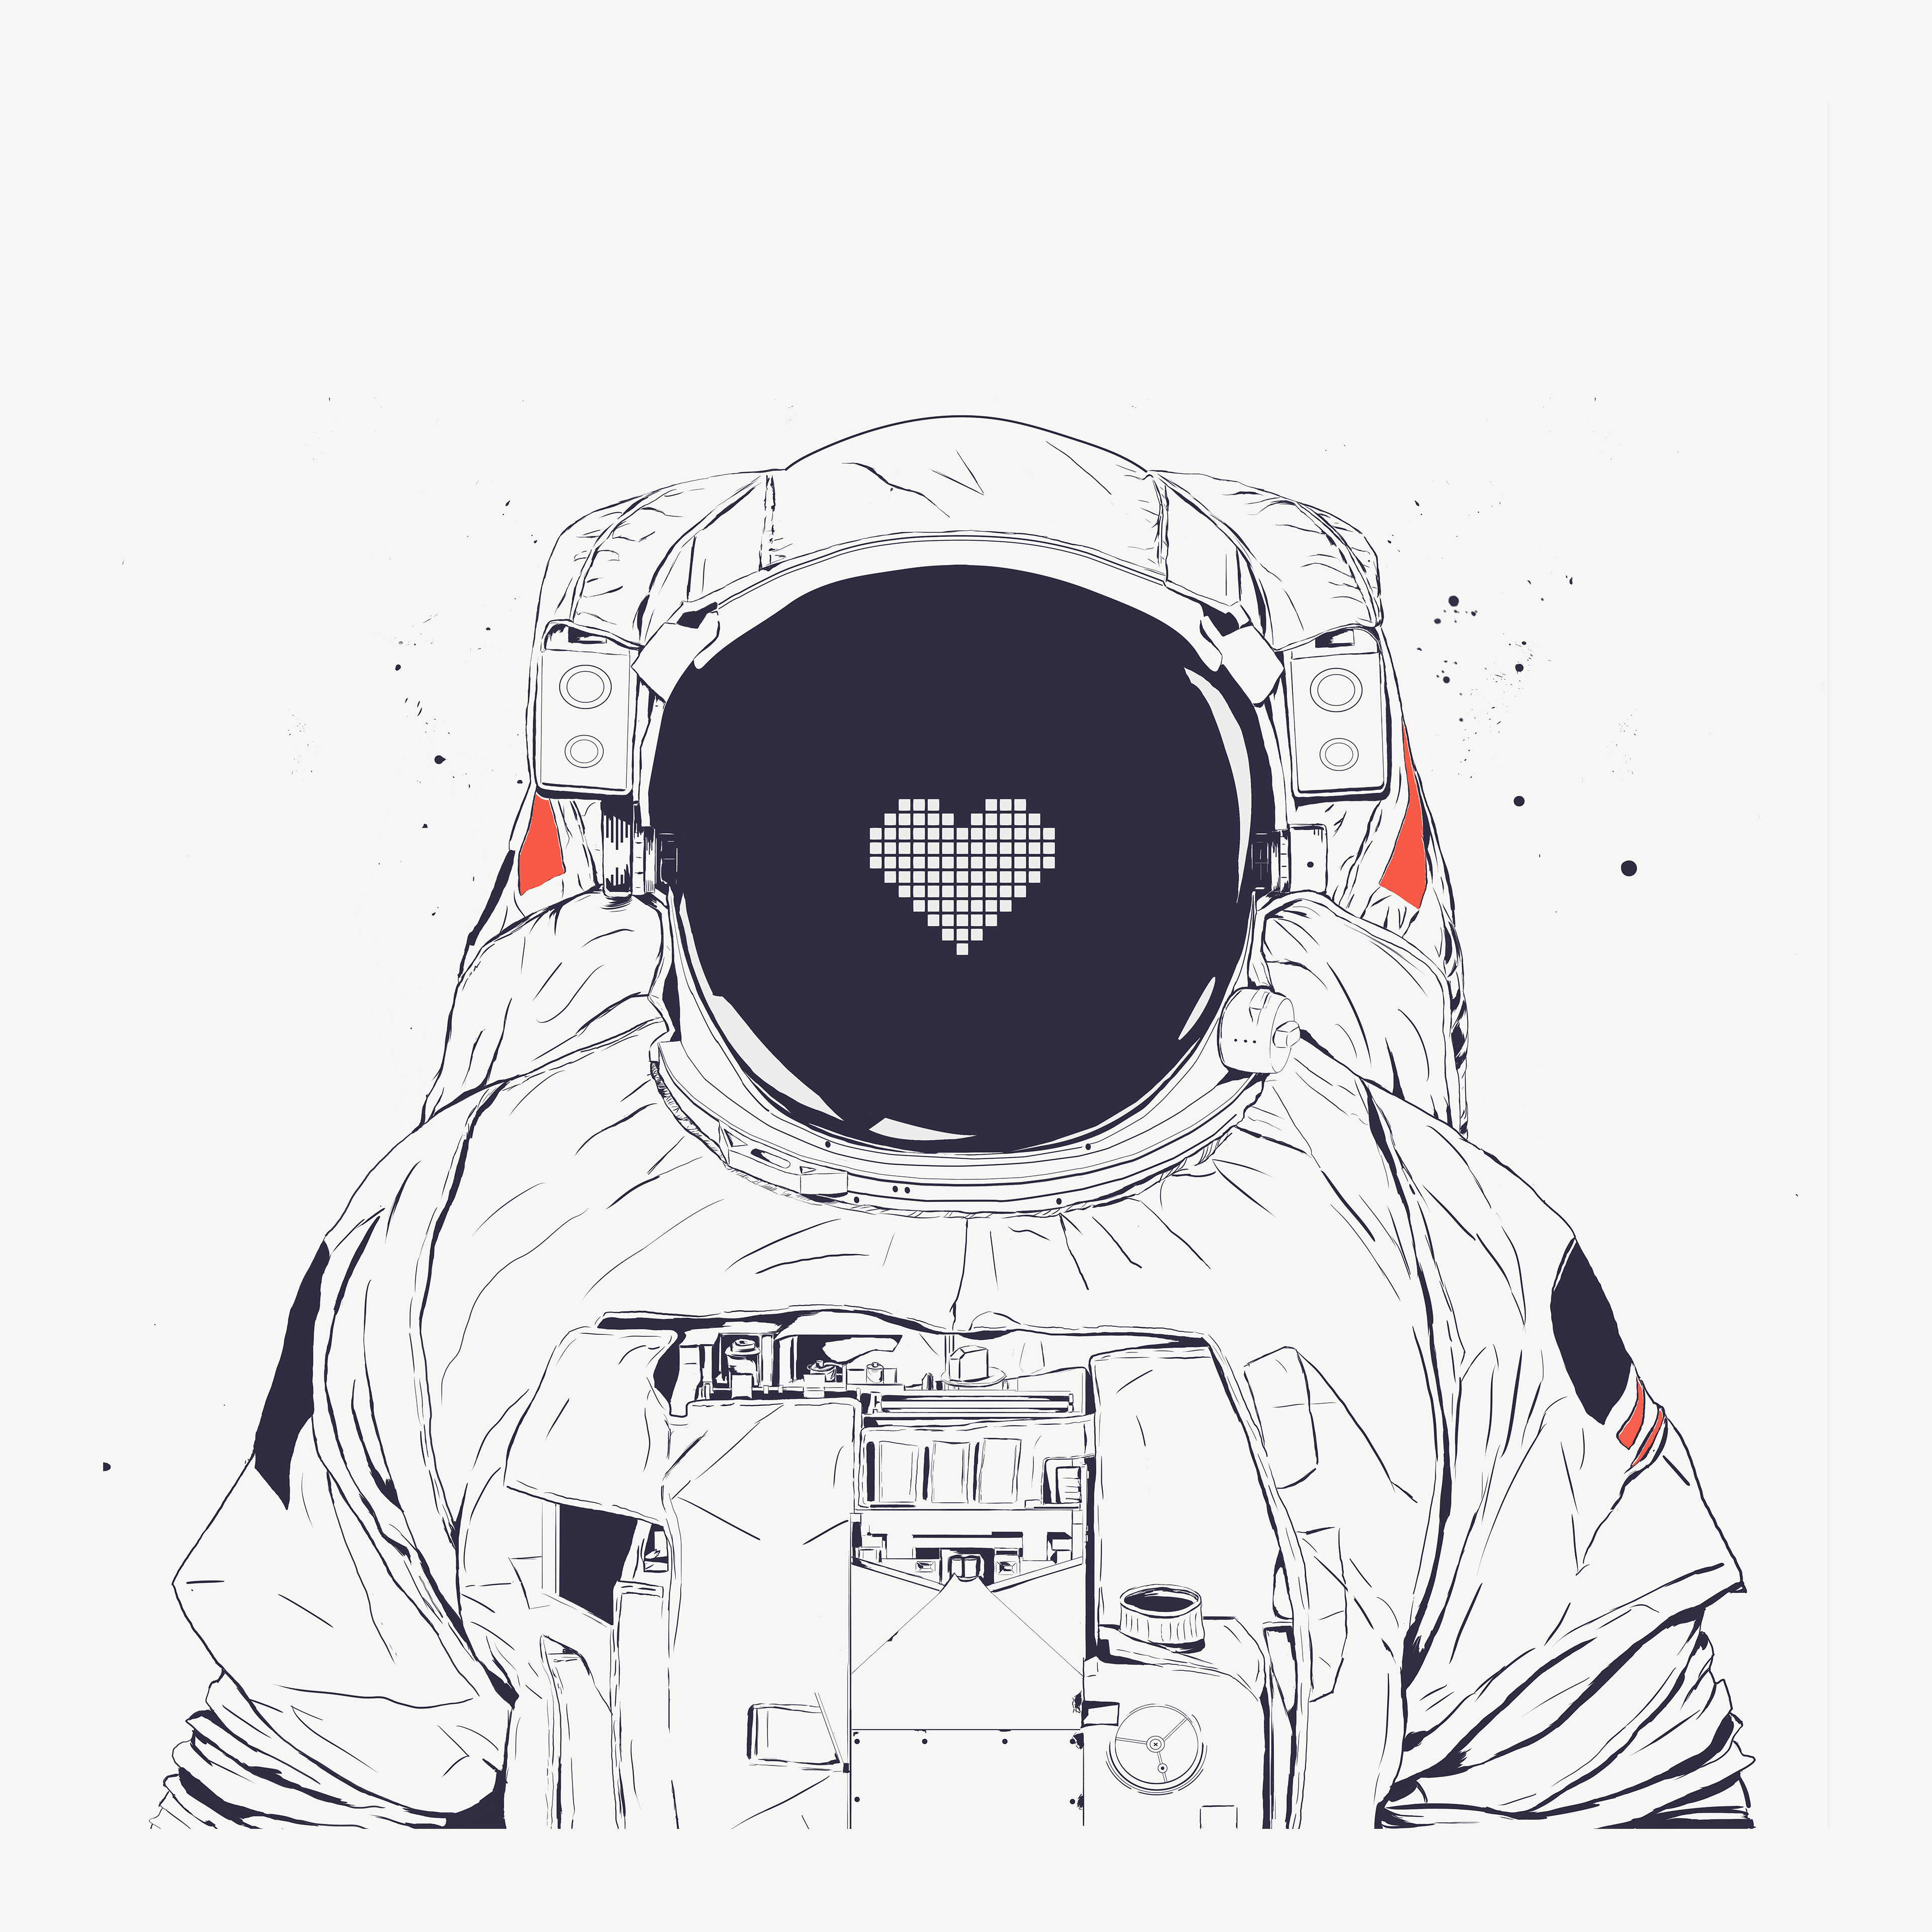 General 3840x3840 simple background digital art heart (design) white background helmet spacesuit astronaut